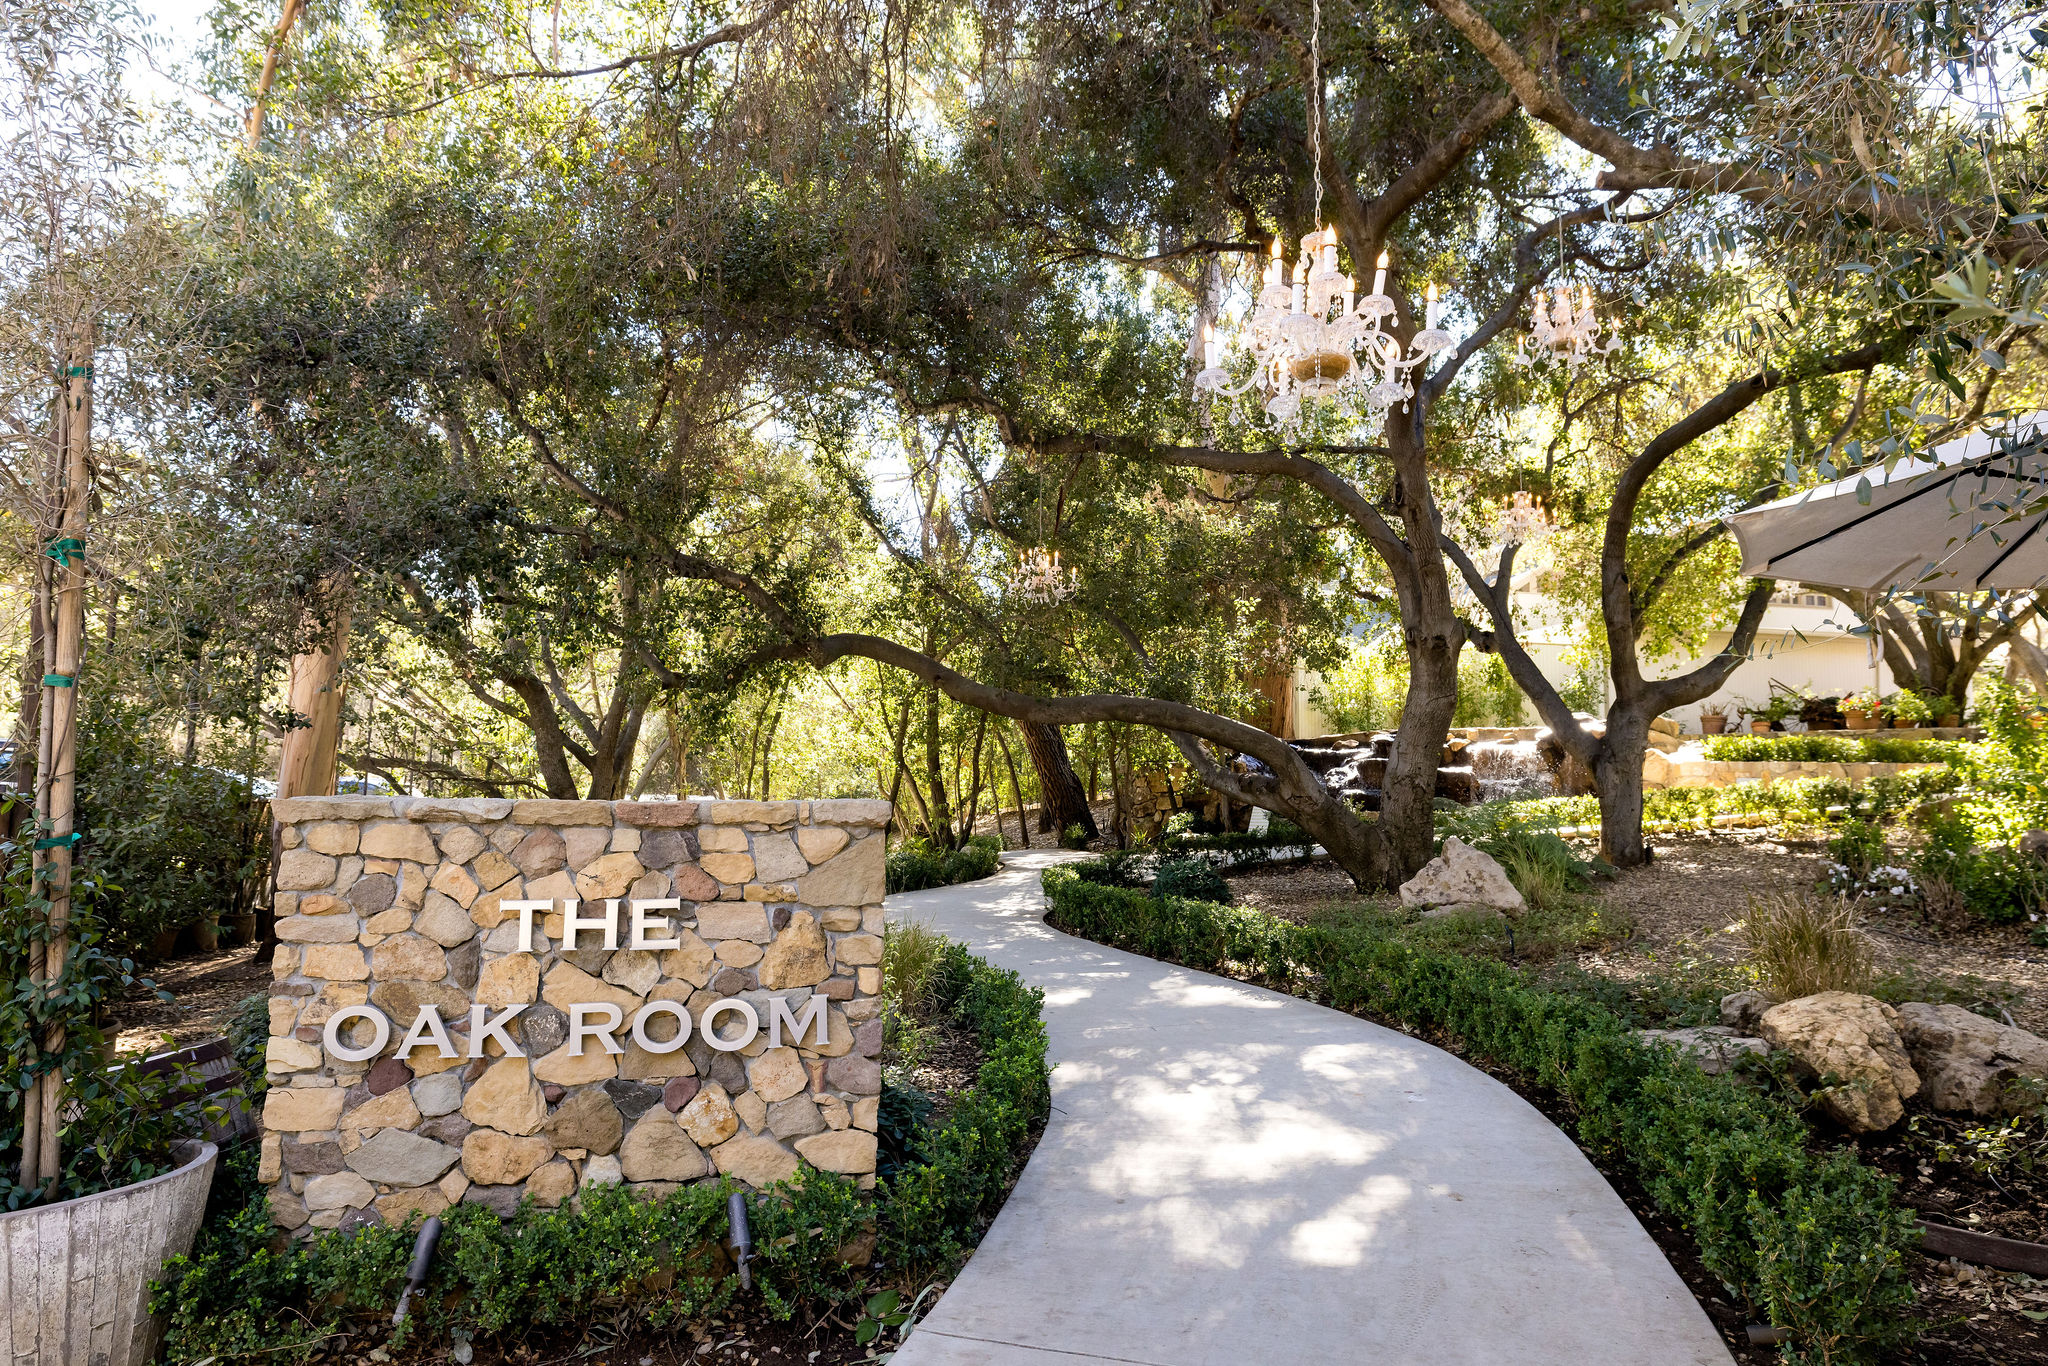 entrance sign of The Oak Room at Calamigos Ranch in Malibu